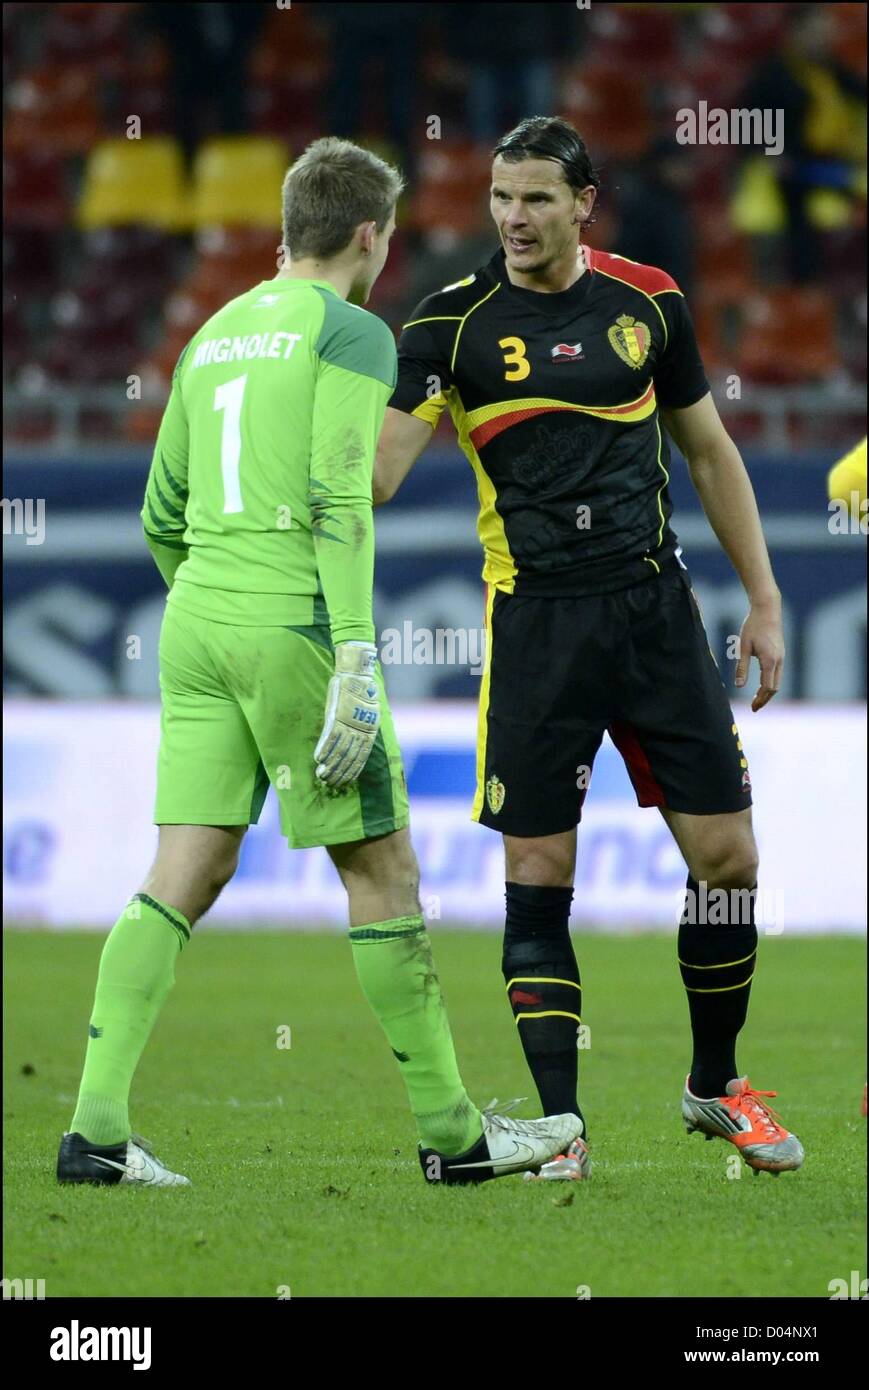 14.11.2012. Bucharest, Romania. International football fiendly. Romania versus Belgium.   Daniel van Buyten and goalkeeper  ignolet discuss tactics Stock Photo